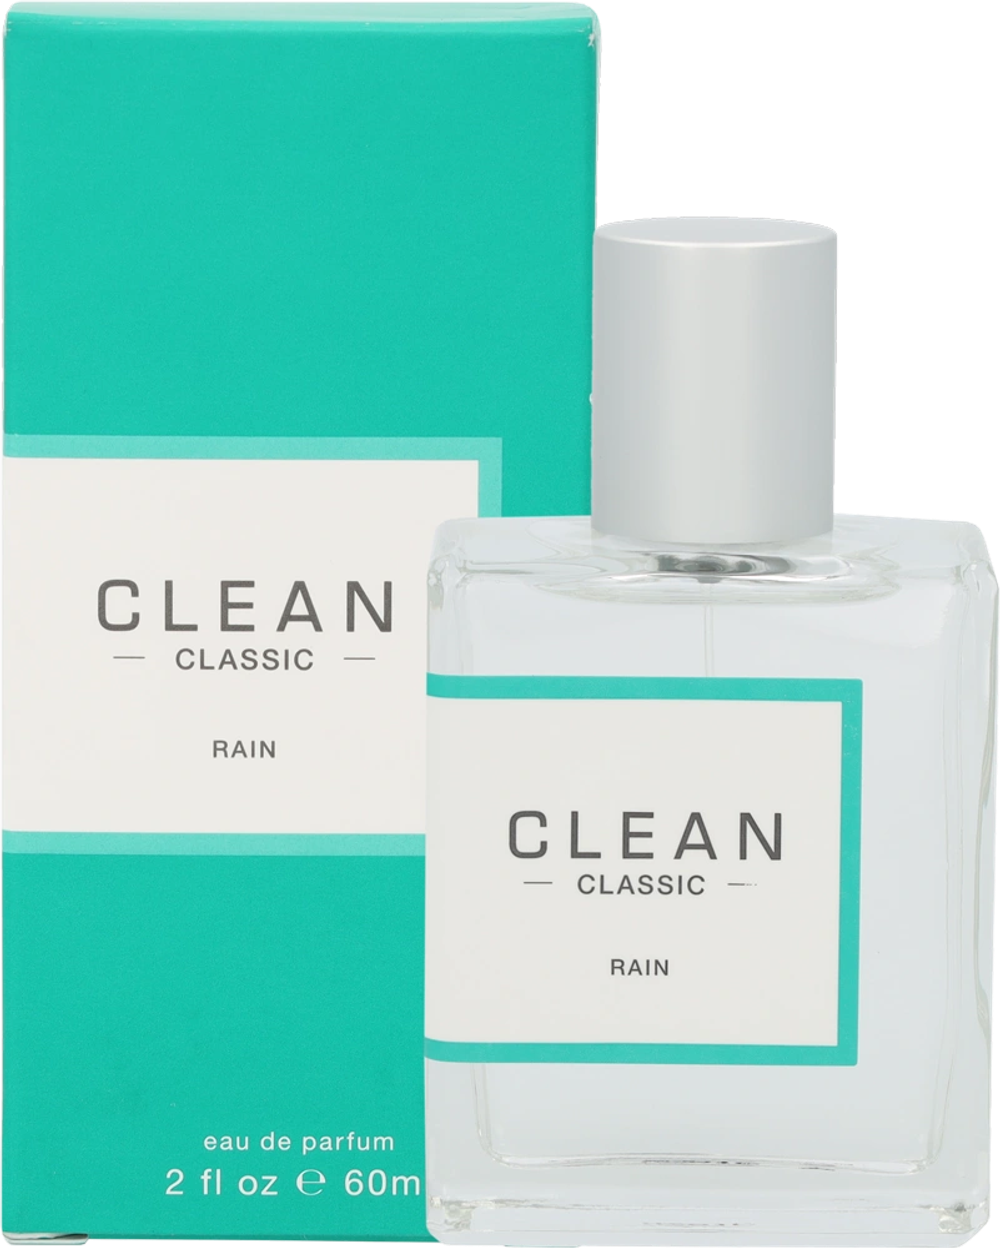 Deals on Clean Classic Rain from Fleggaard at 299 kr.